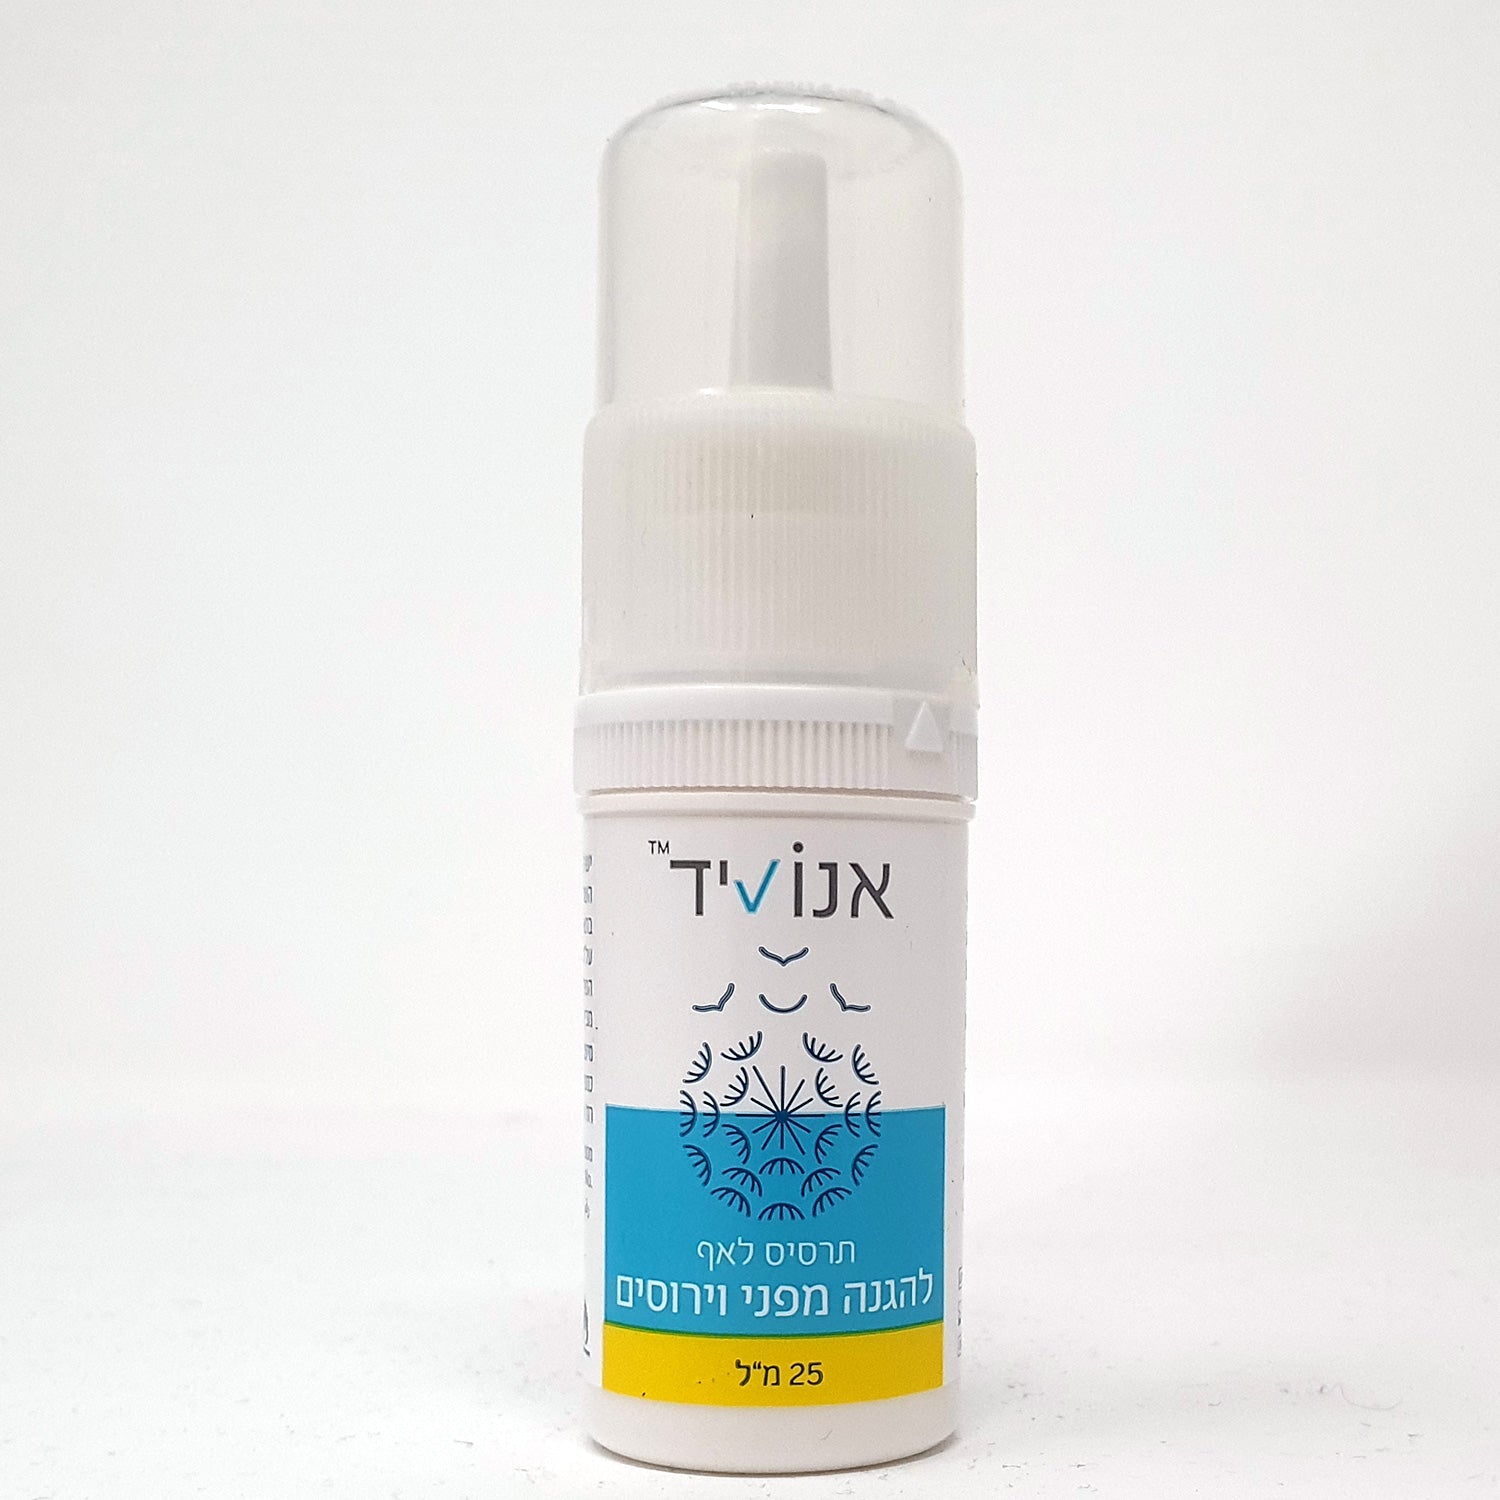 Special Offer! 5-PACK Enovid SaNOtize Nitric Oxide Nasal Spray (NONS)